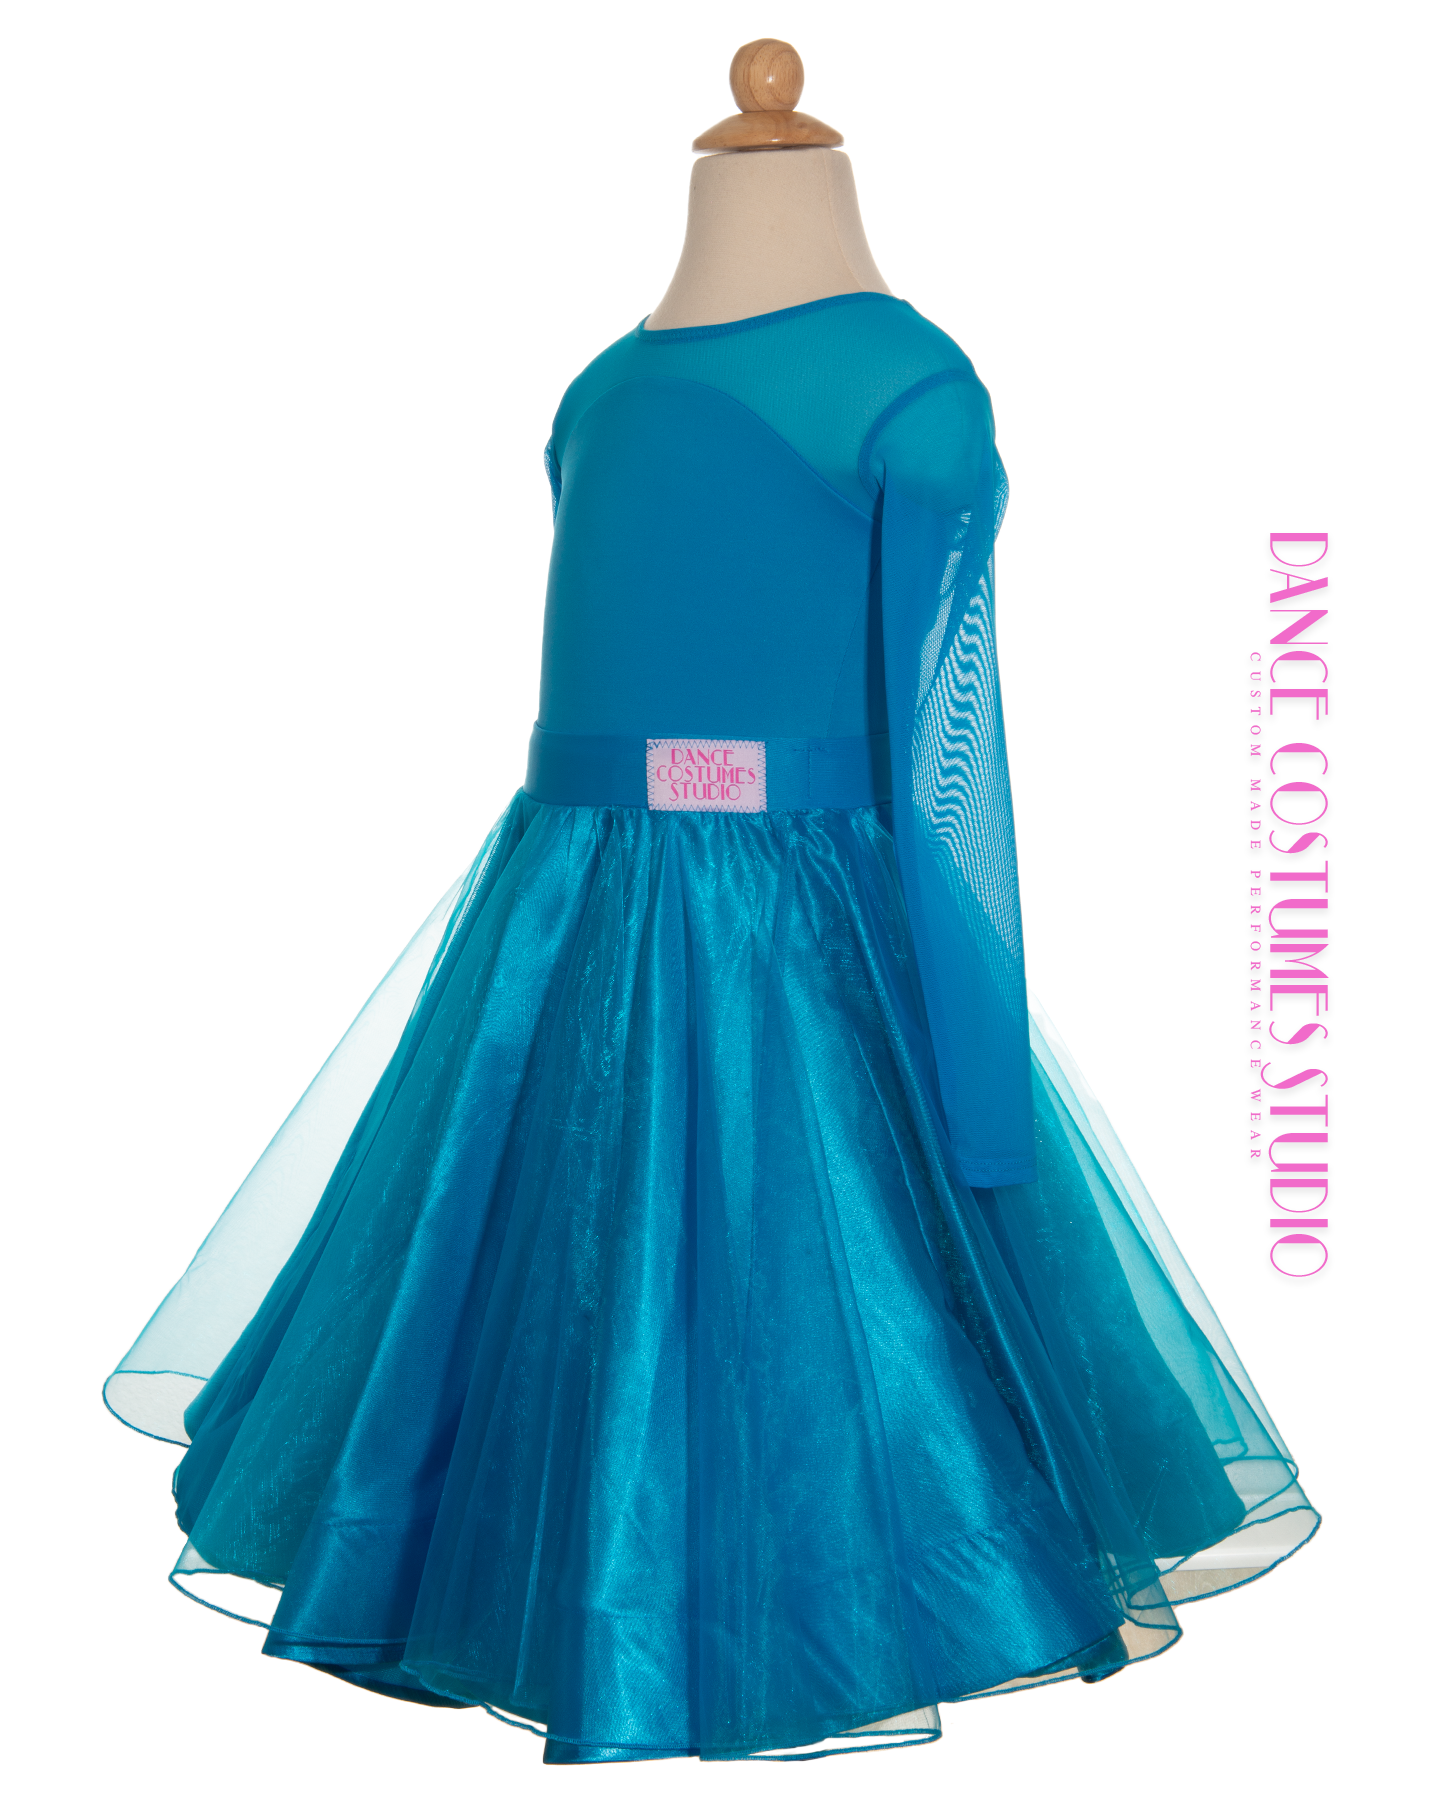 Erica Preteen Competition Ballroom Dress